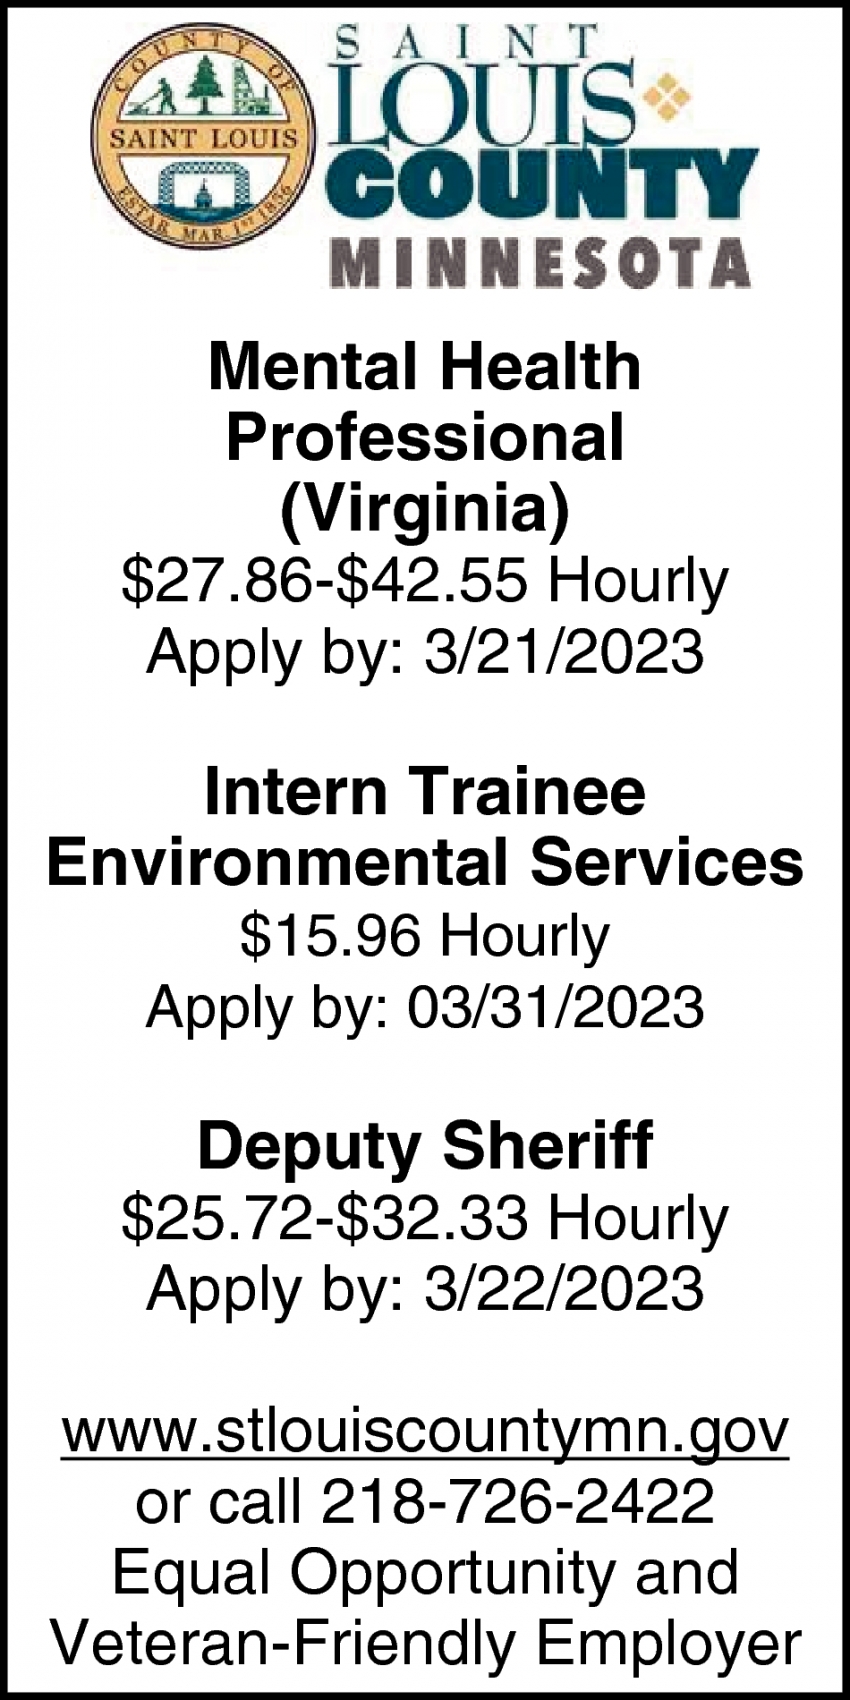 Mental Health Professional, Intern Trainee Environmental Services, Deputy Sheriff